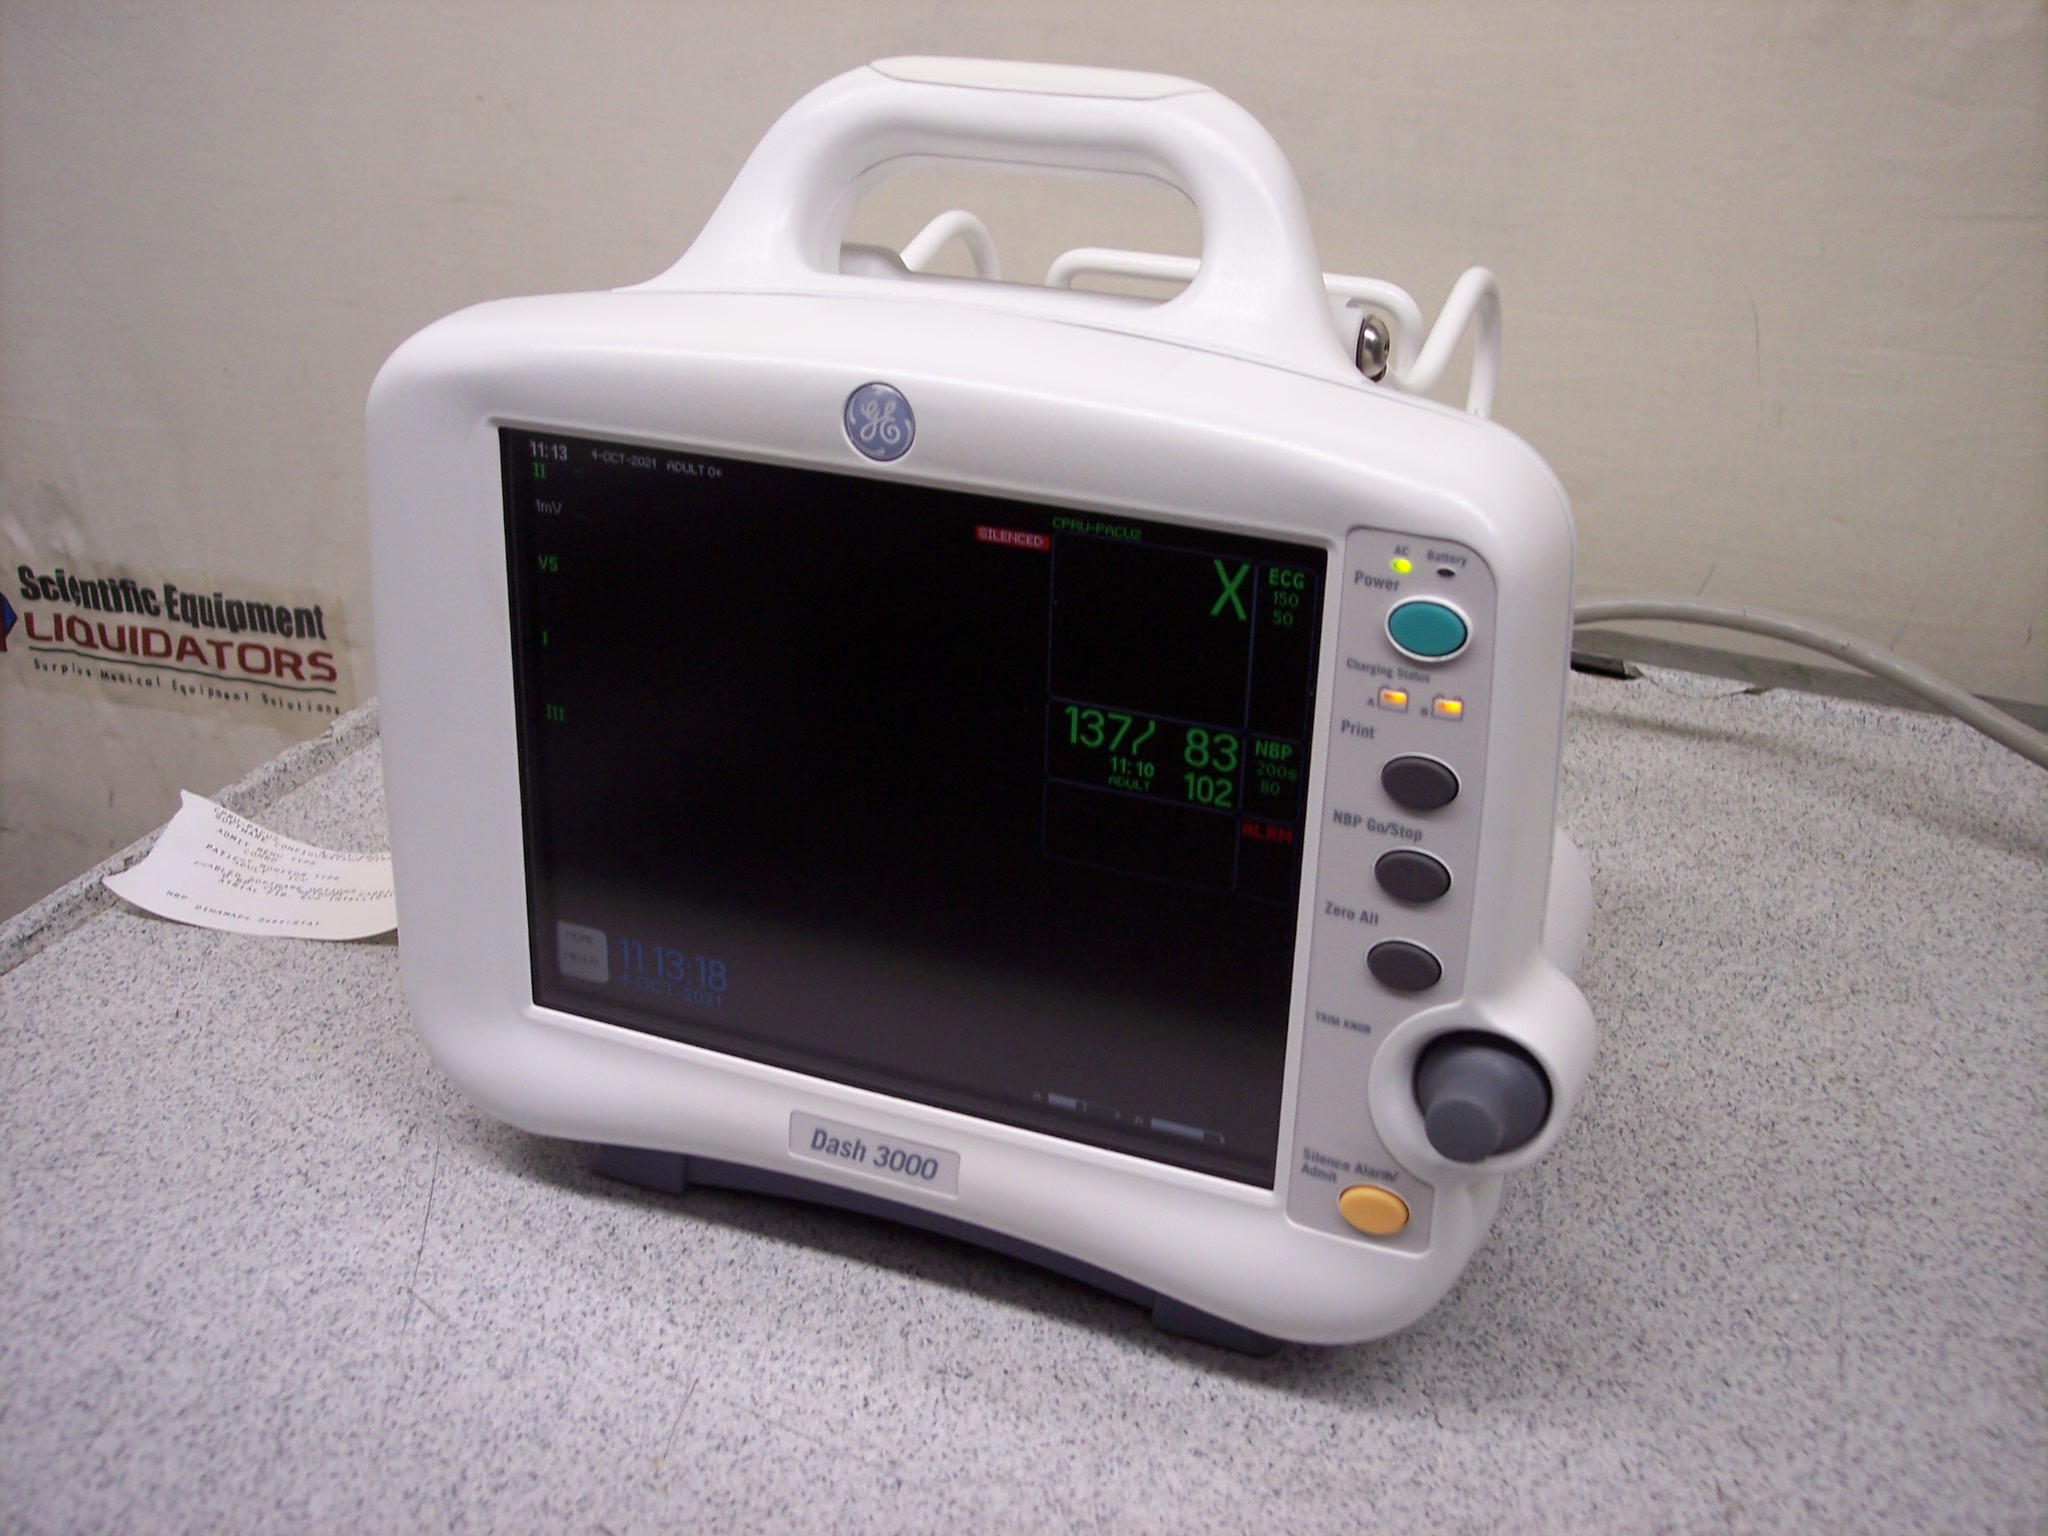 GE Dash 3000 Patient Monitor